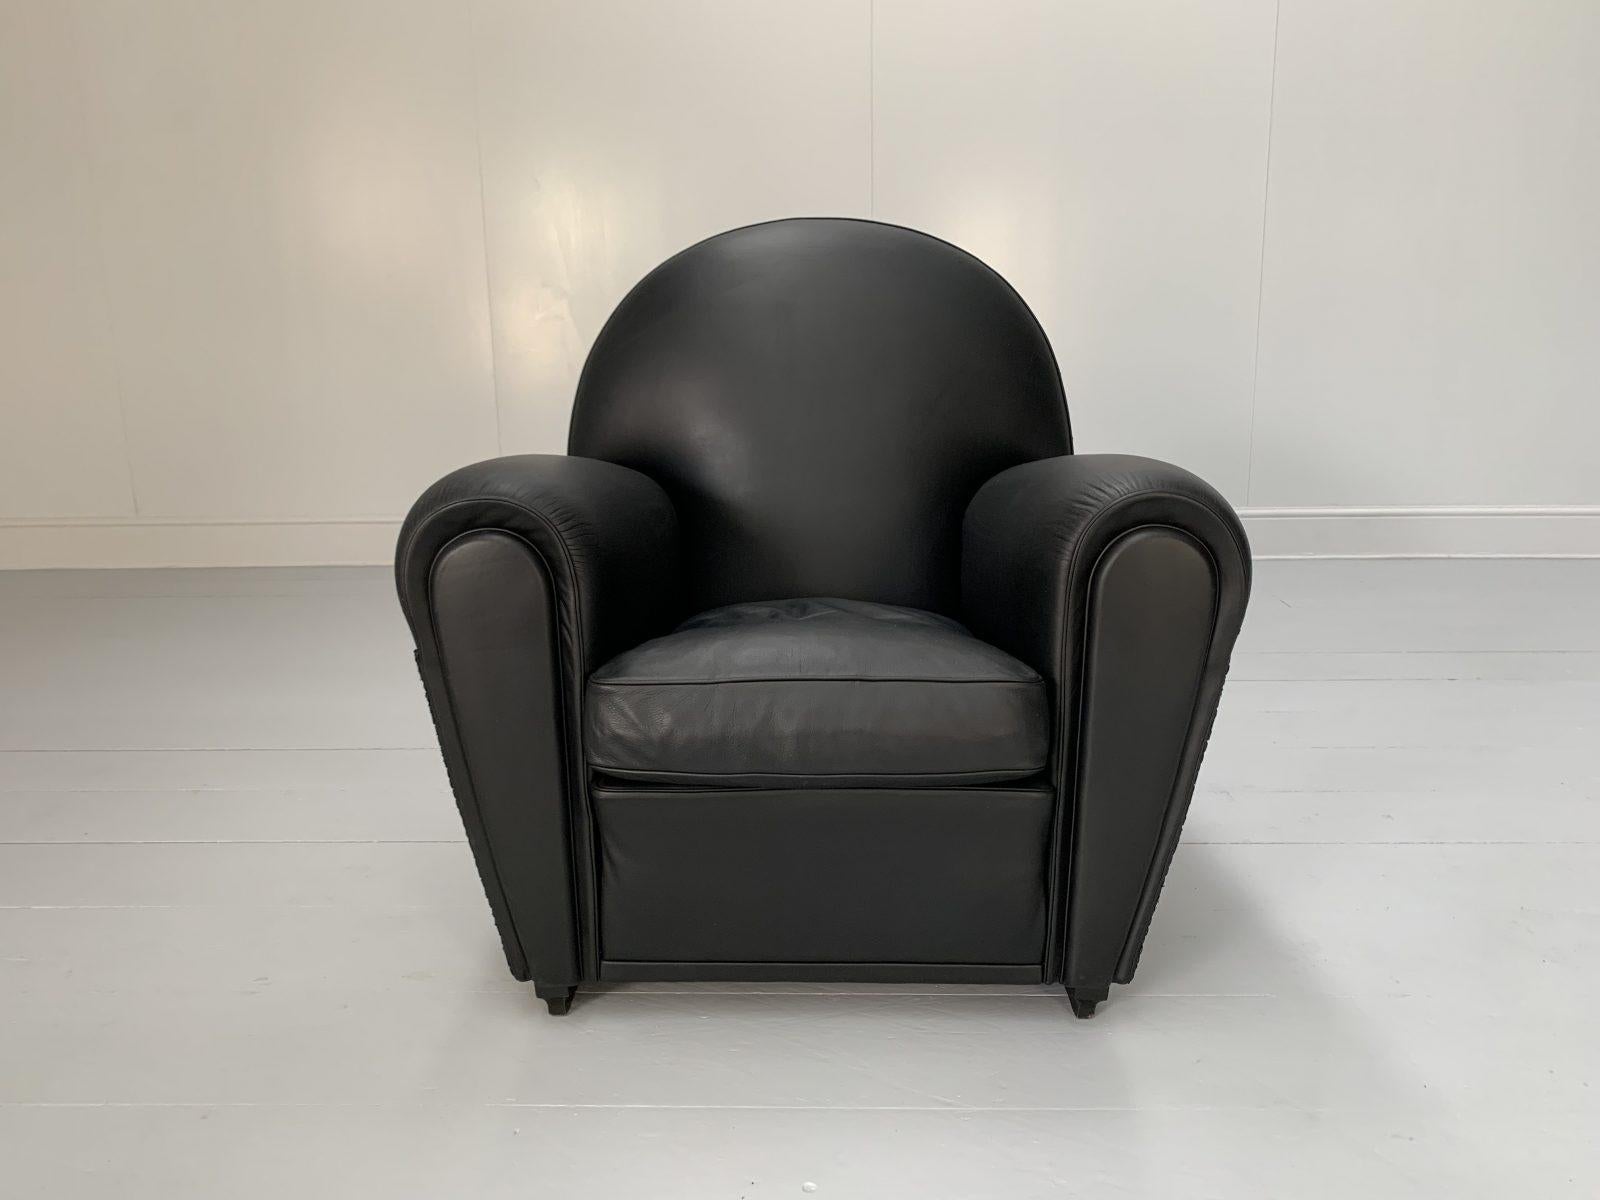 Cuir Paire de fauteuils Vanity Fair de Poltrona Frau - En cuir noir Pelle Frau en vente